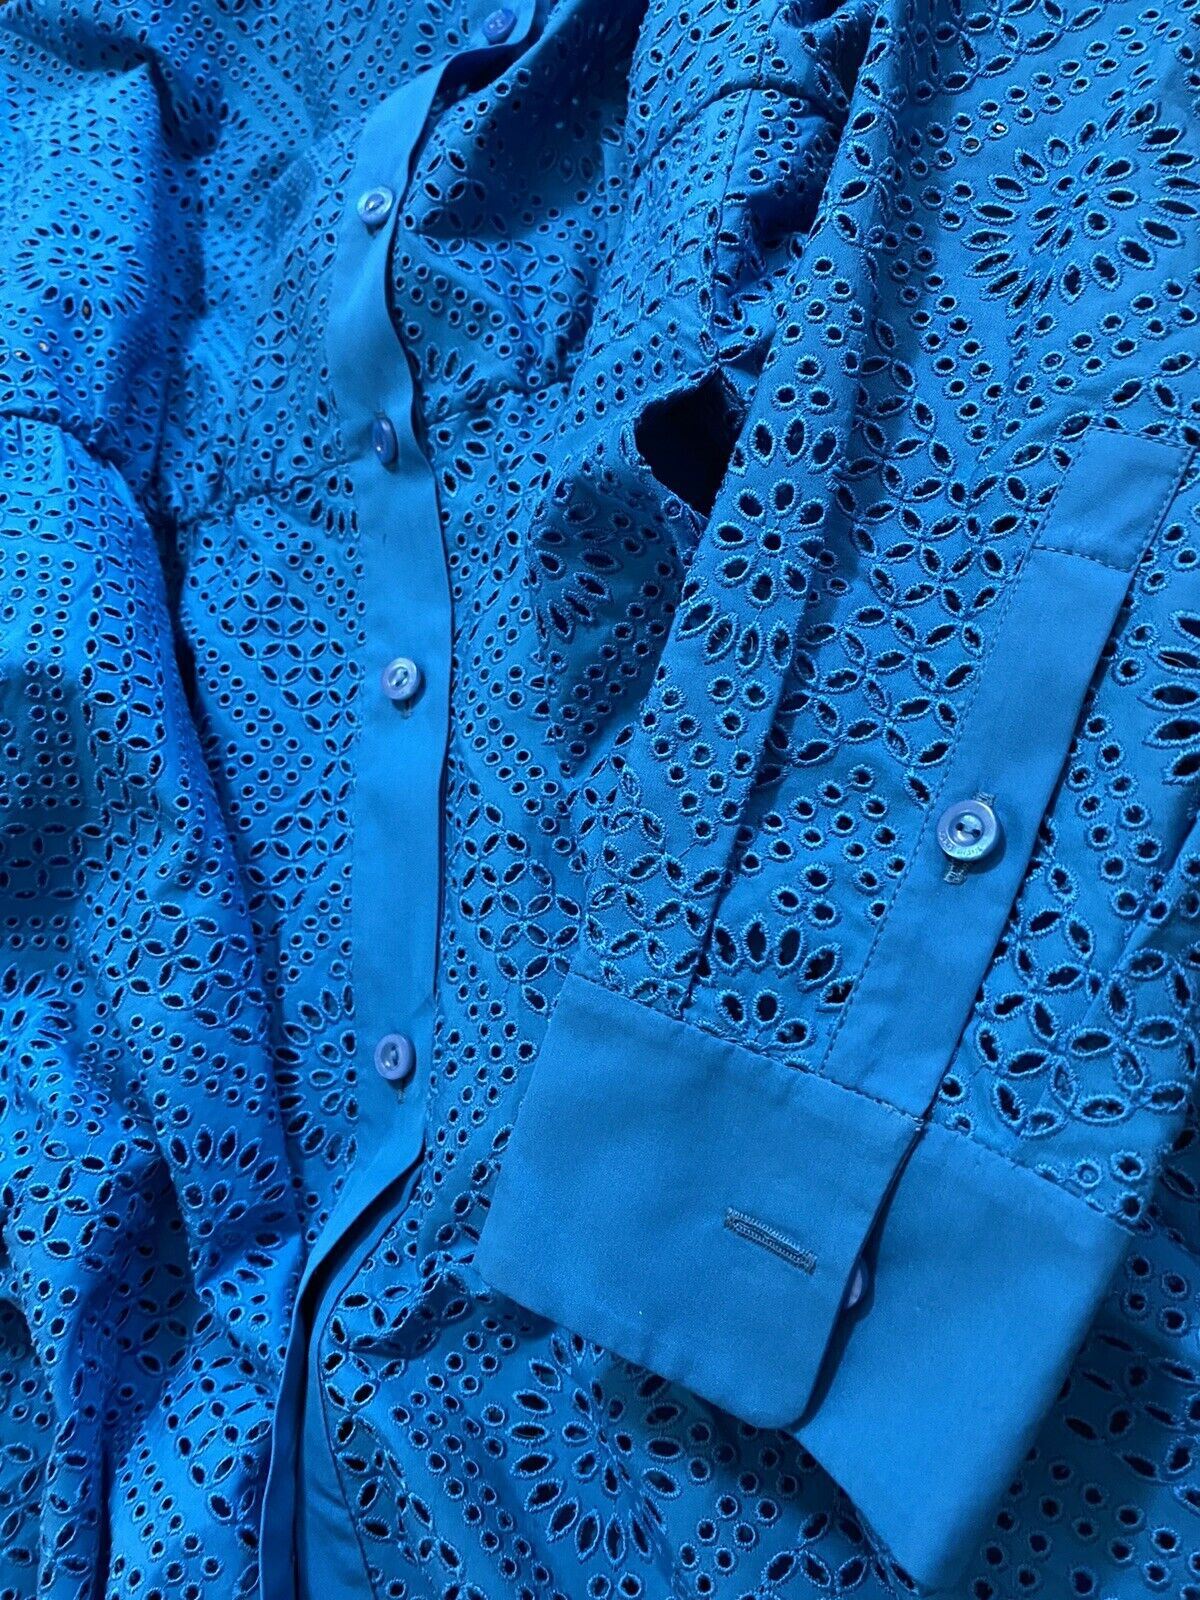 New $3600 Loro Piana Lucienne Eyelet A-Line Shirt Dress Blue 46/12 Italy